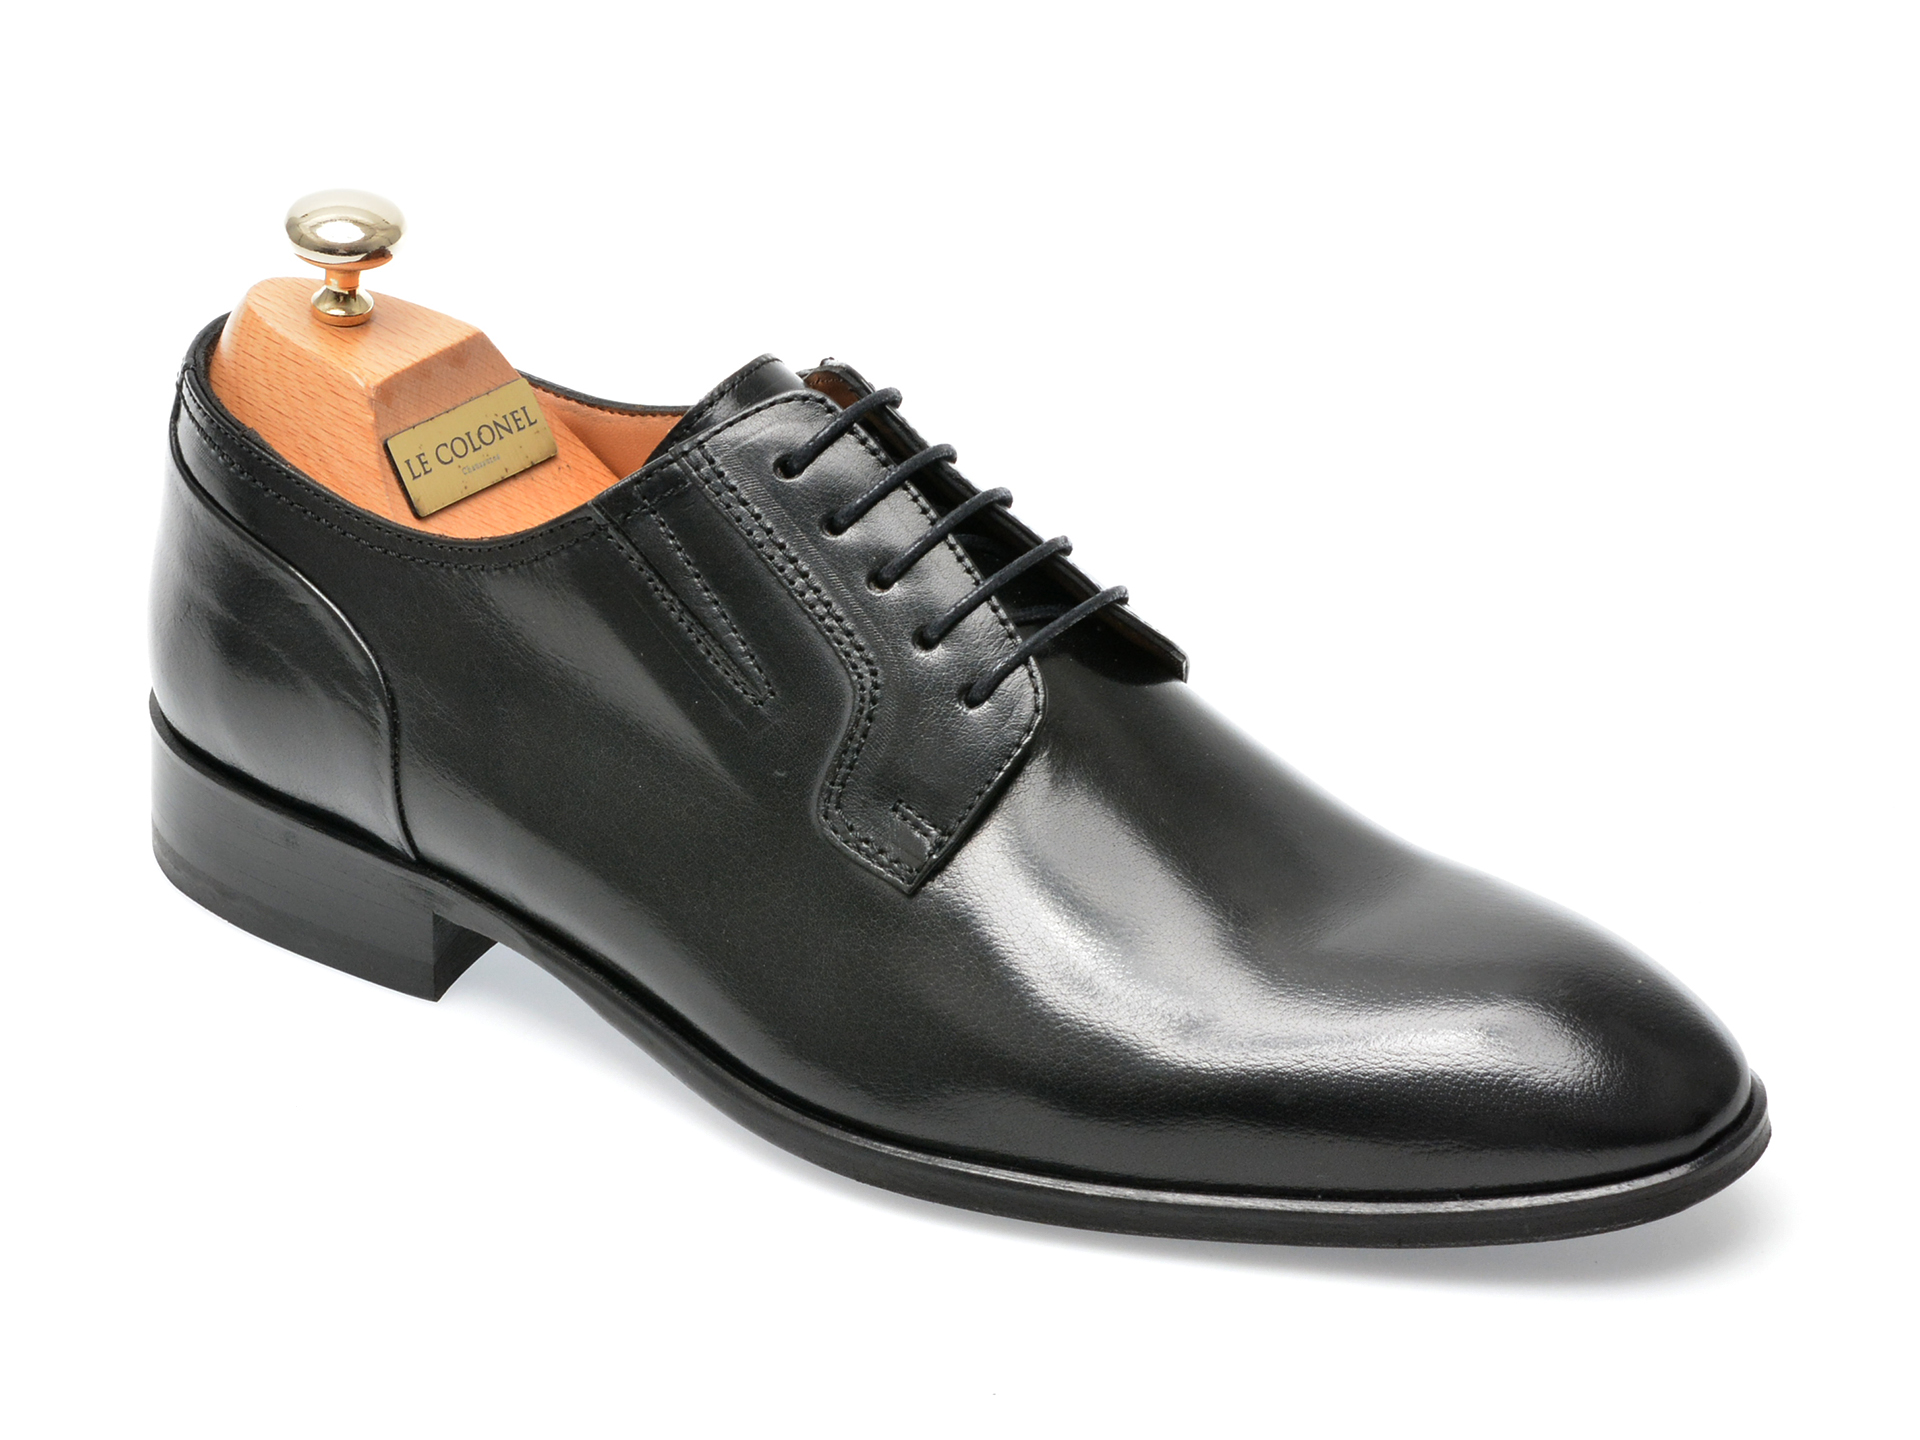 Pantofi LE COLONEL negri, 327130, din piele naturala /barbati/pantofi